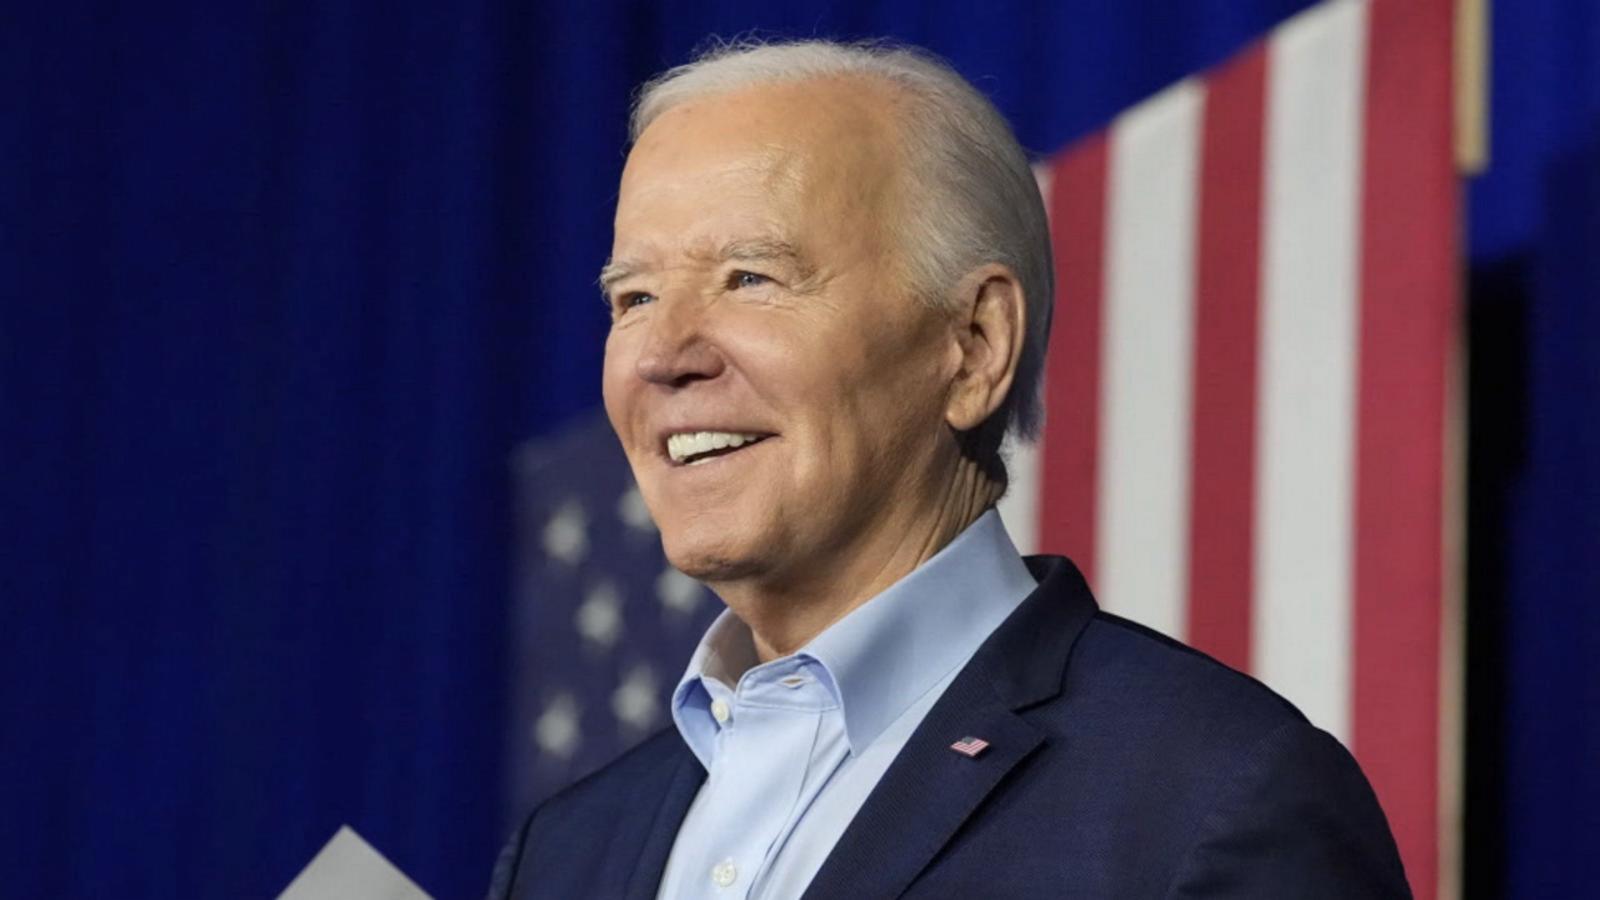 VIDEO: Biden hits campaign trail in Pennsylvania